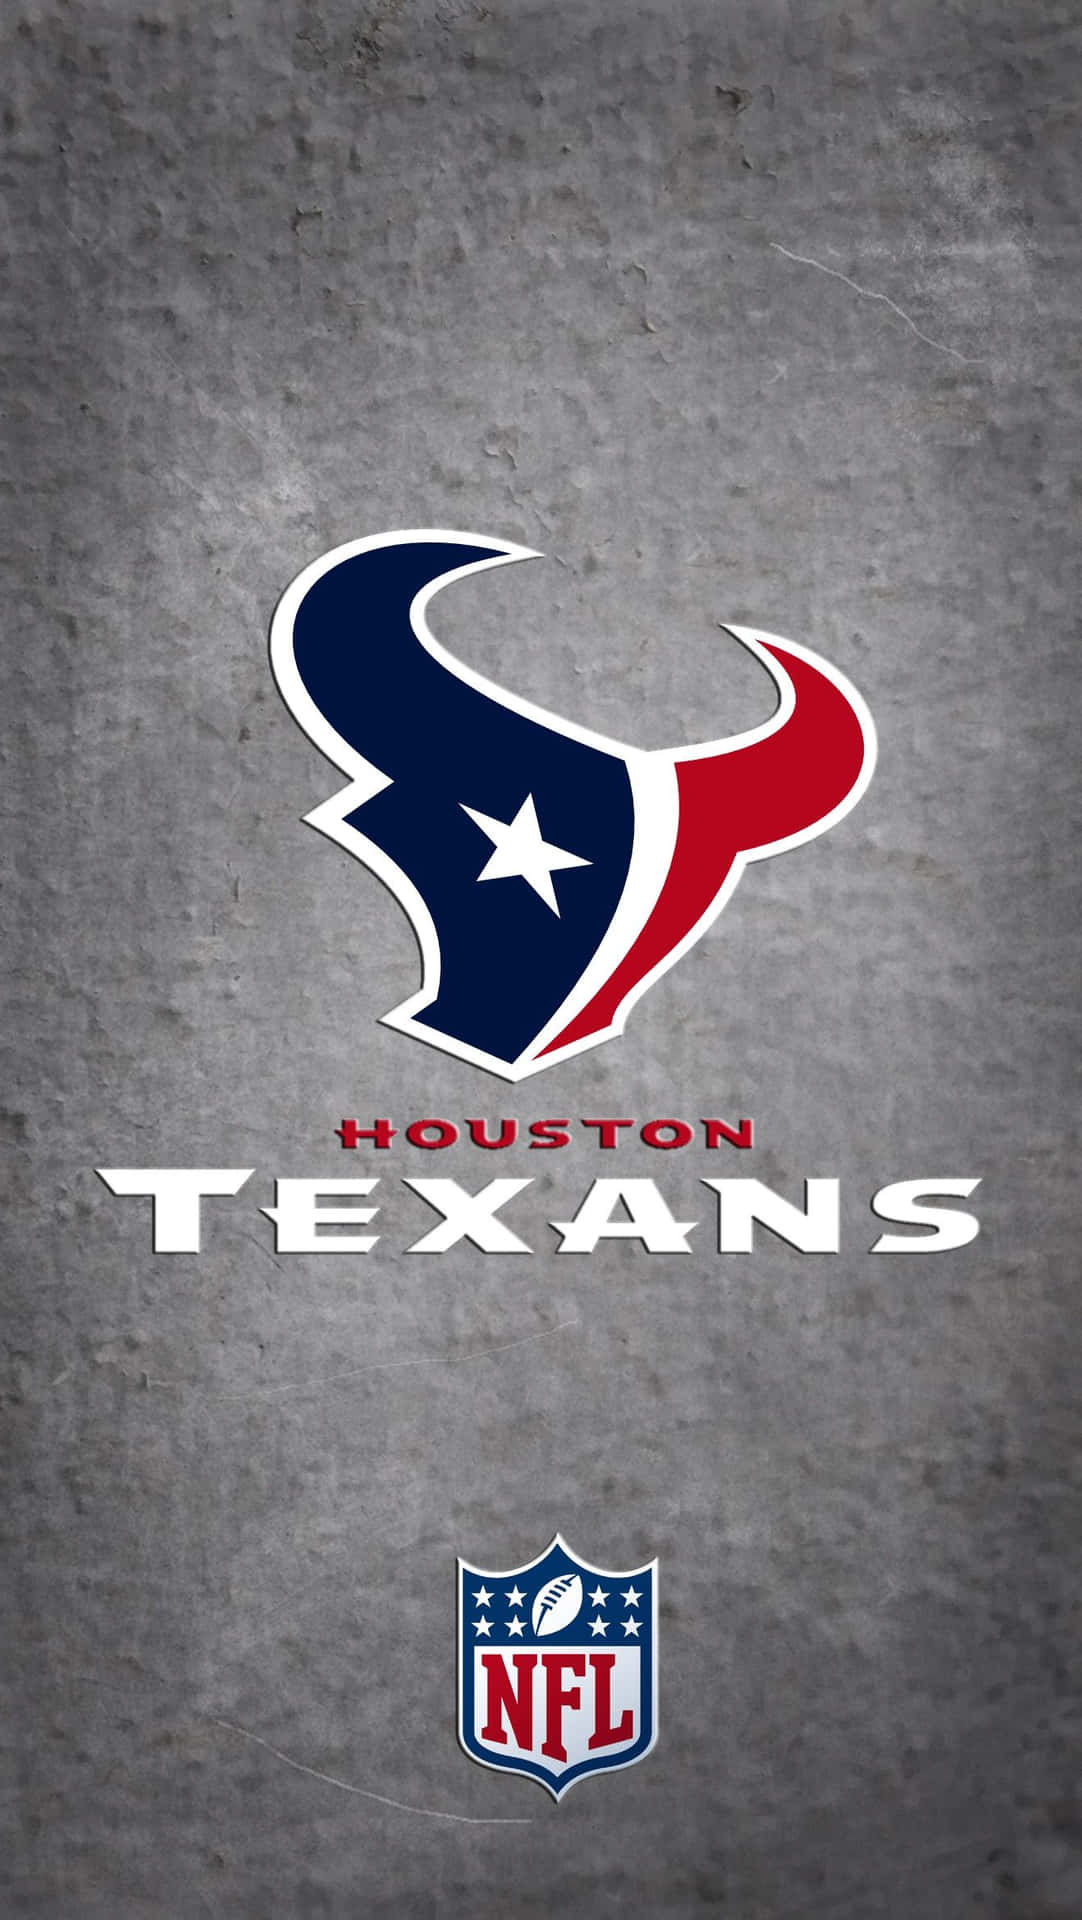 100+] Houston Texans Logo Wallpapers